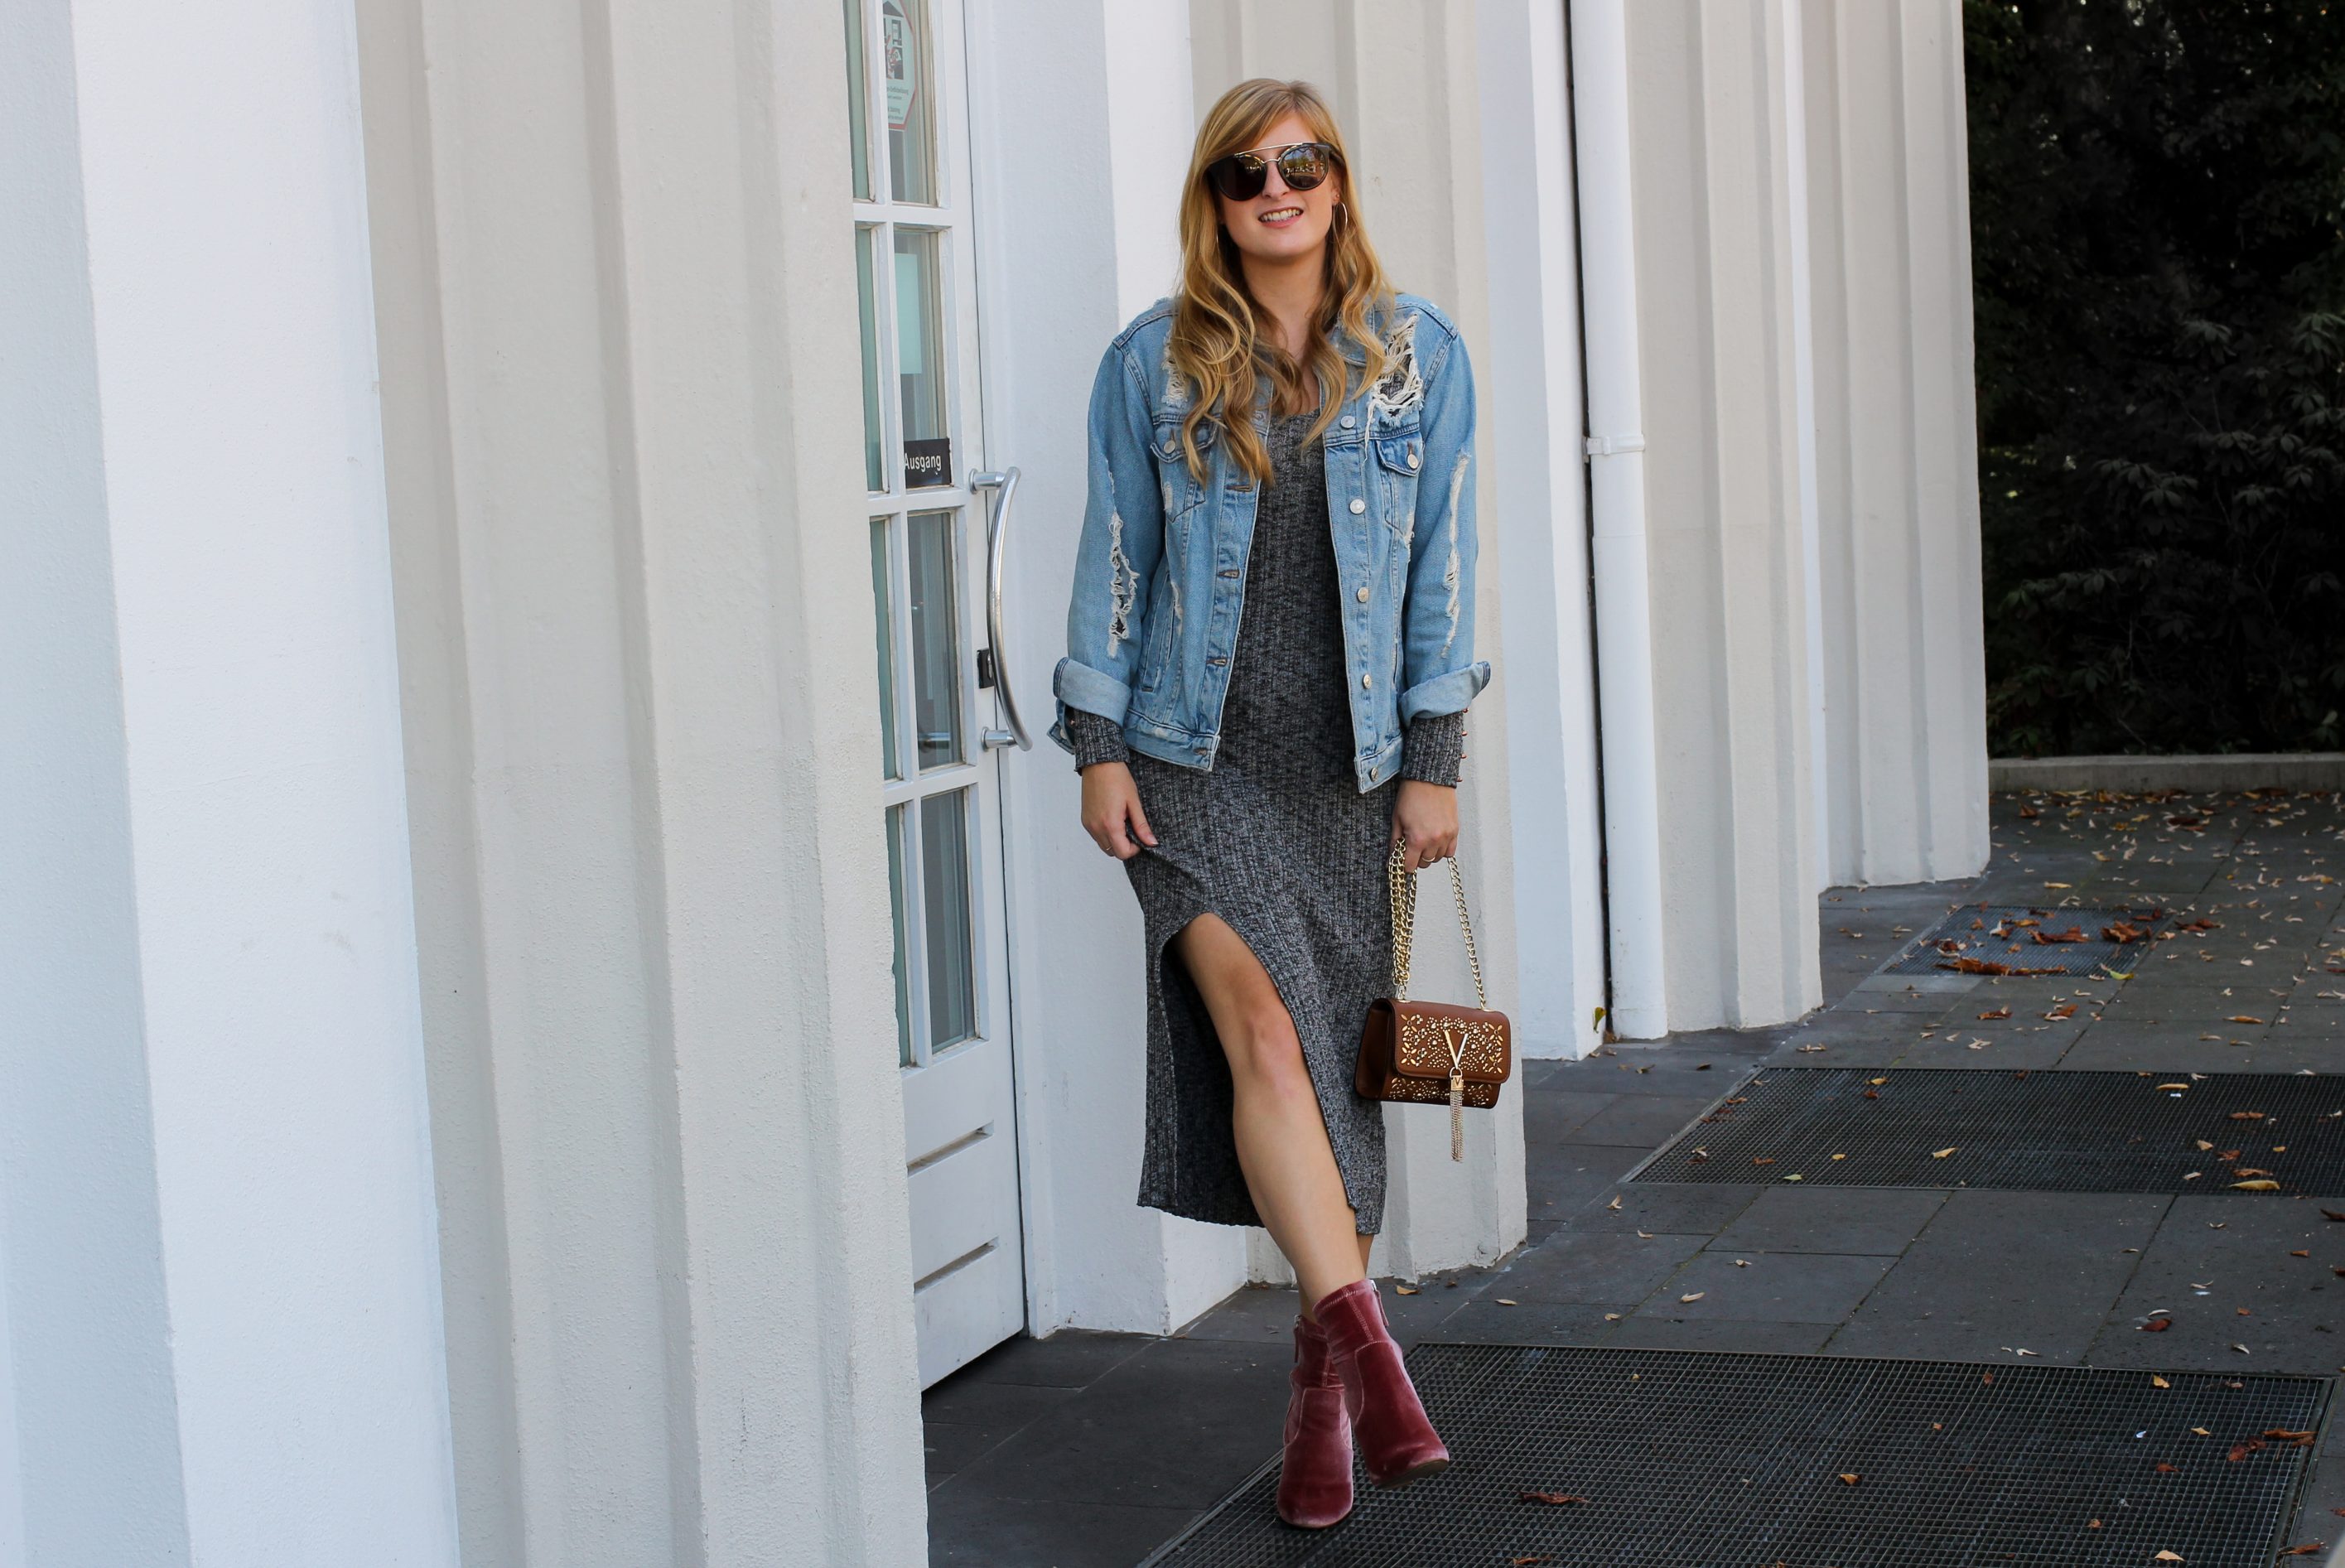 Herbstfavorit Wollkleid grau kombinieren Outfit rosa samt Heels Stiefeletten Jeansjacke Valentino Handbags Fashion Blog Bonn